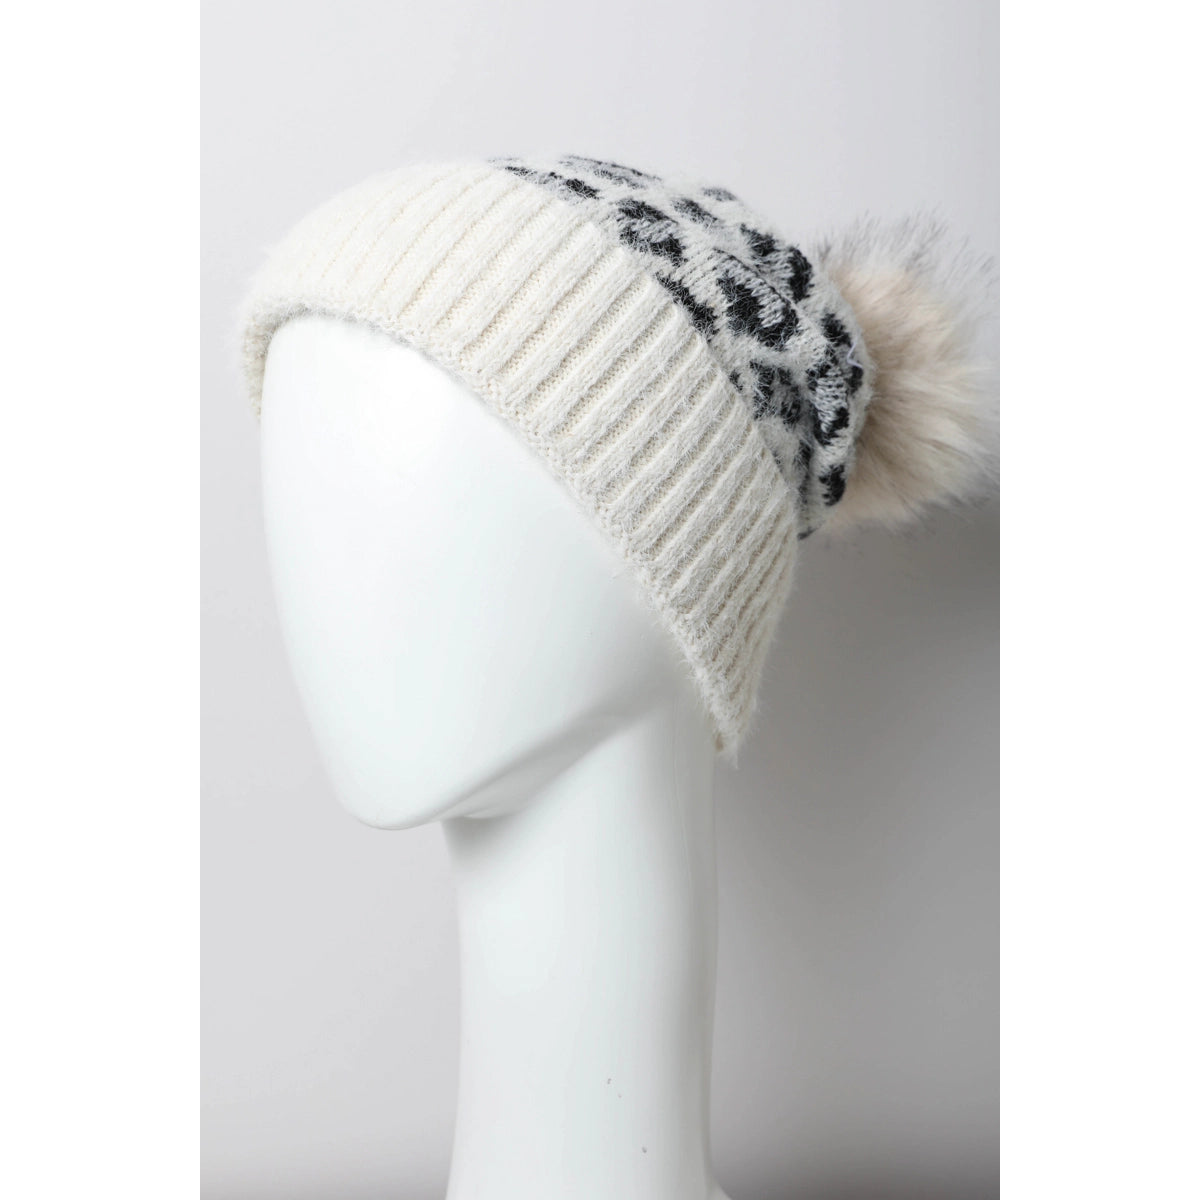 Leto Accessories Leopard Knit Beanie Hat